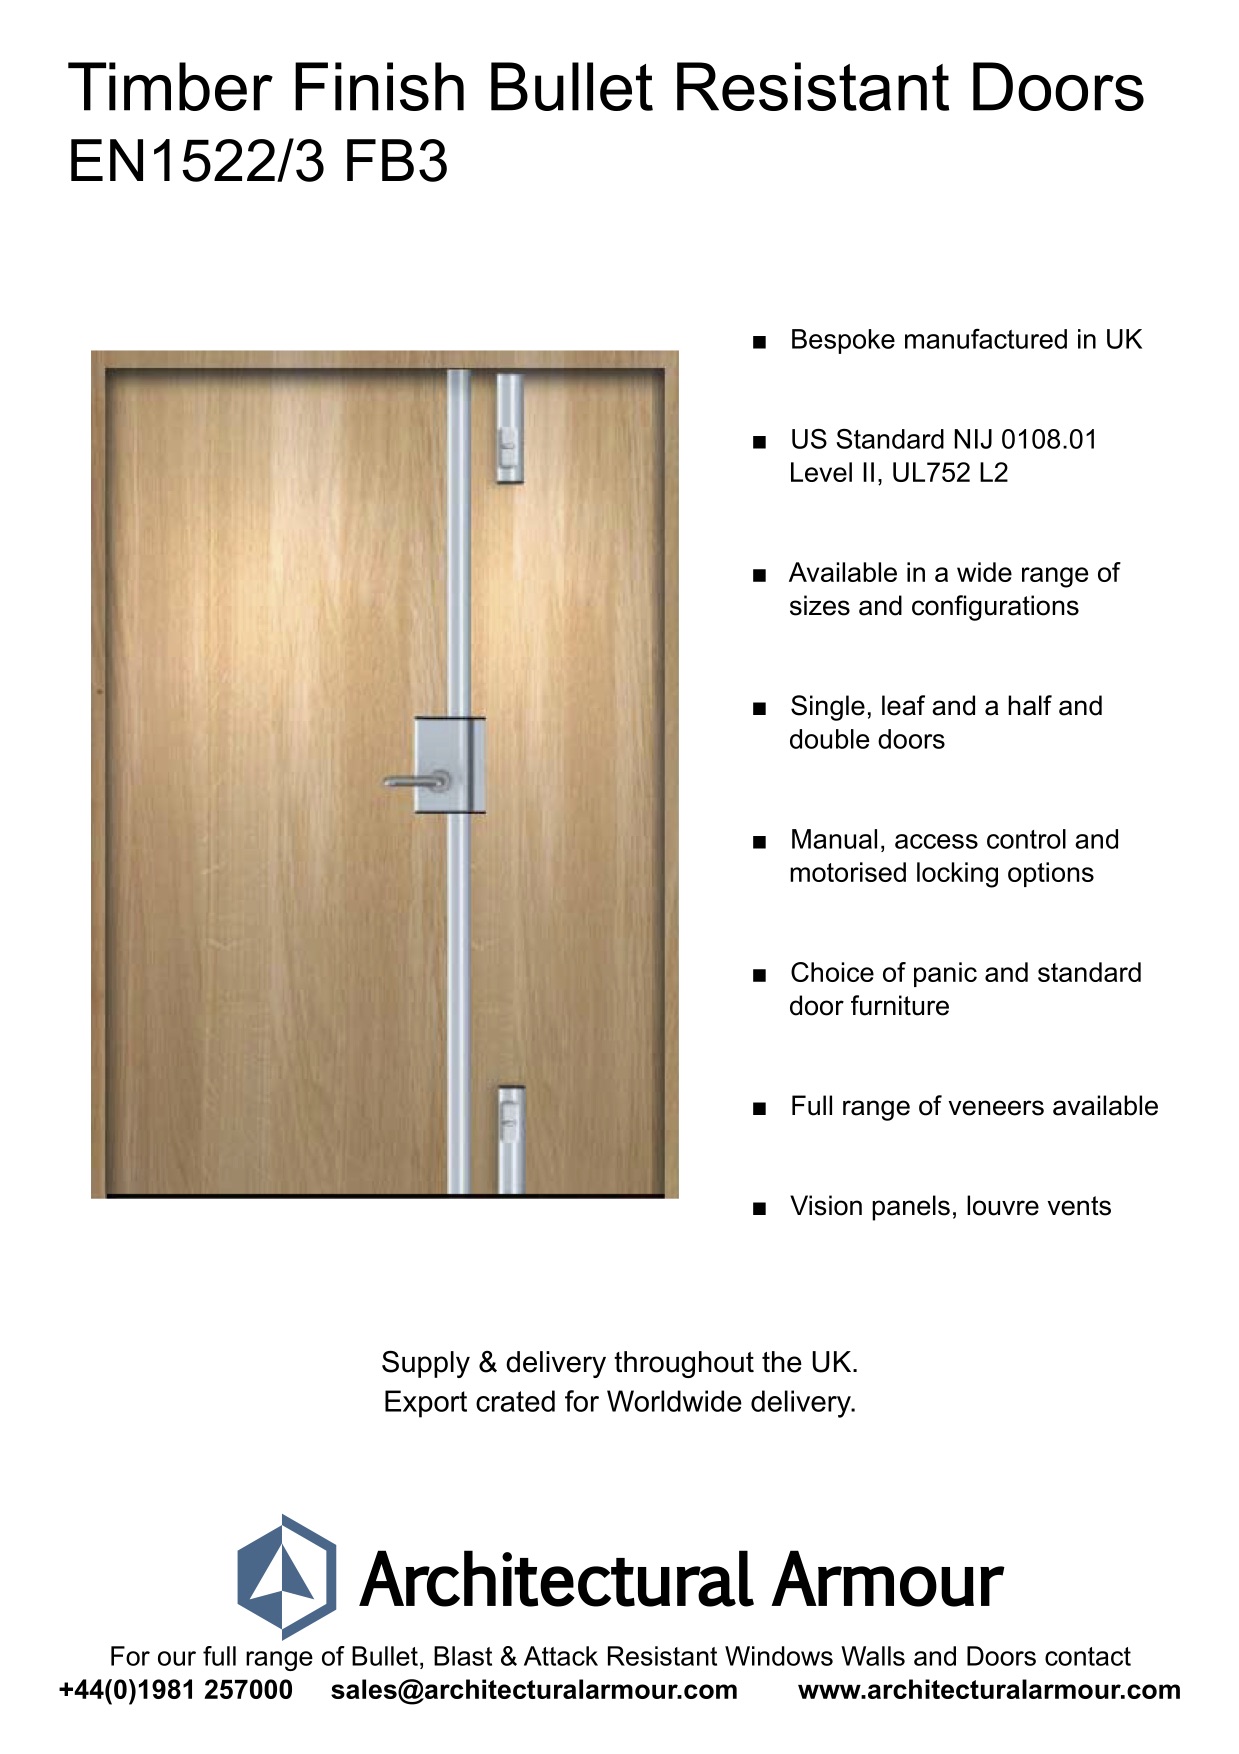 Bullet-Resistant-Timber-Finish-Doors-EN1522-3-FB3